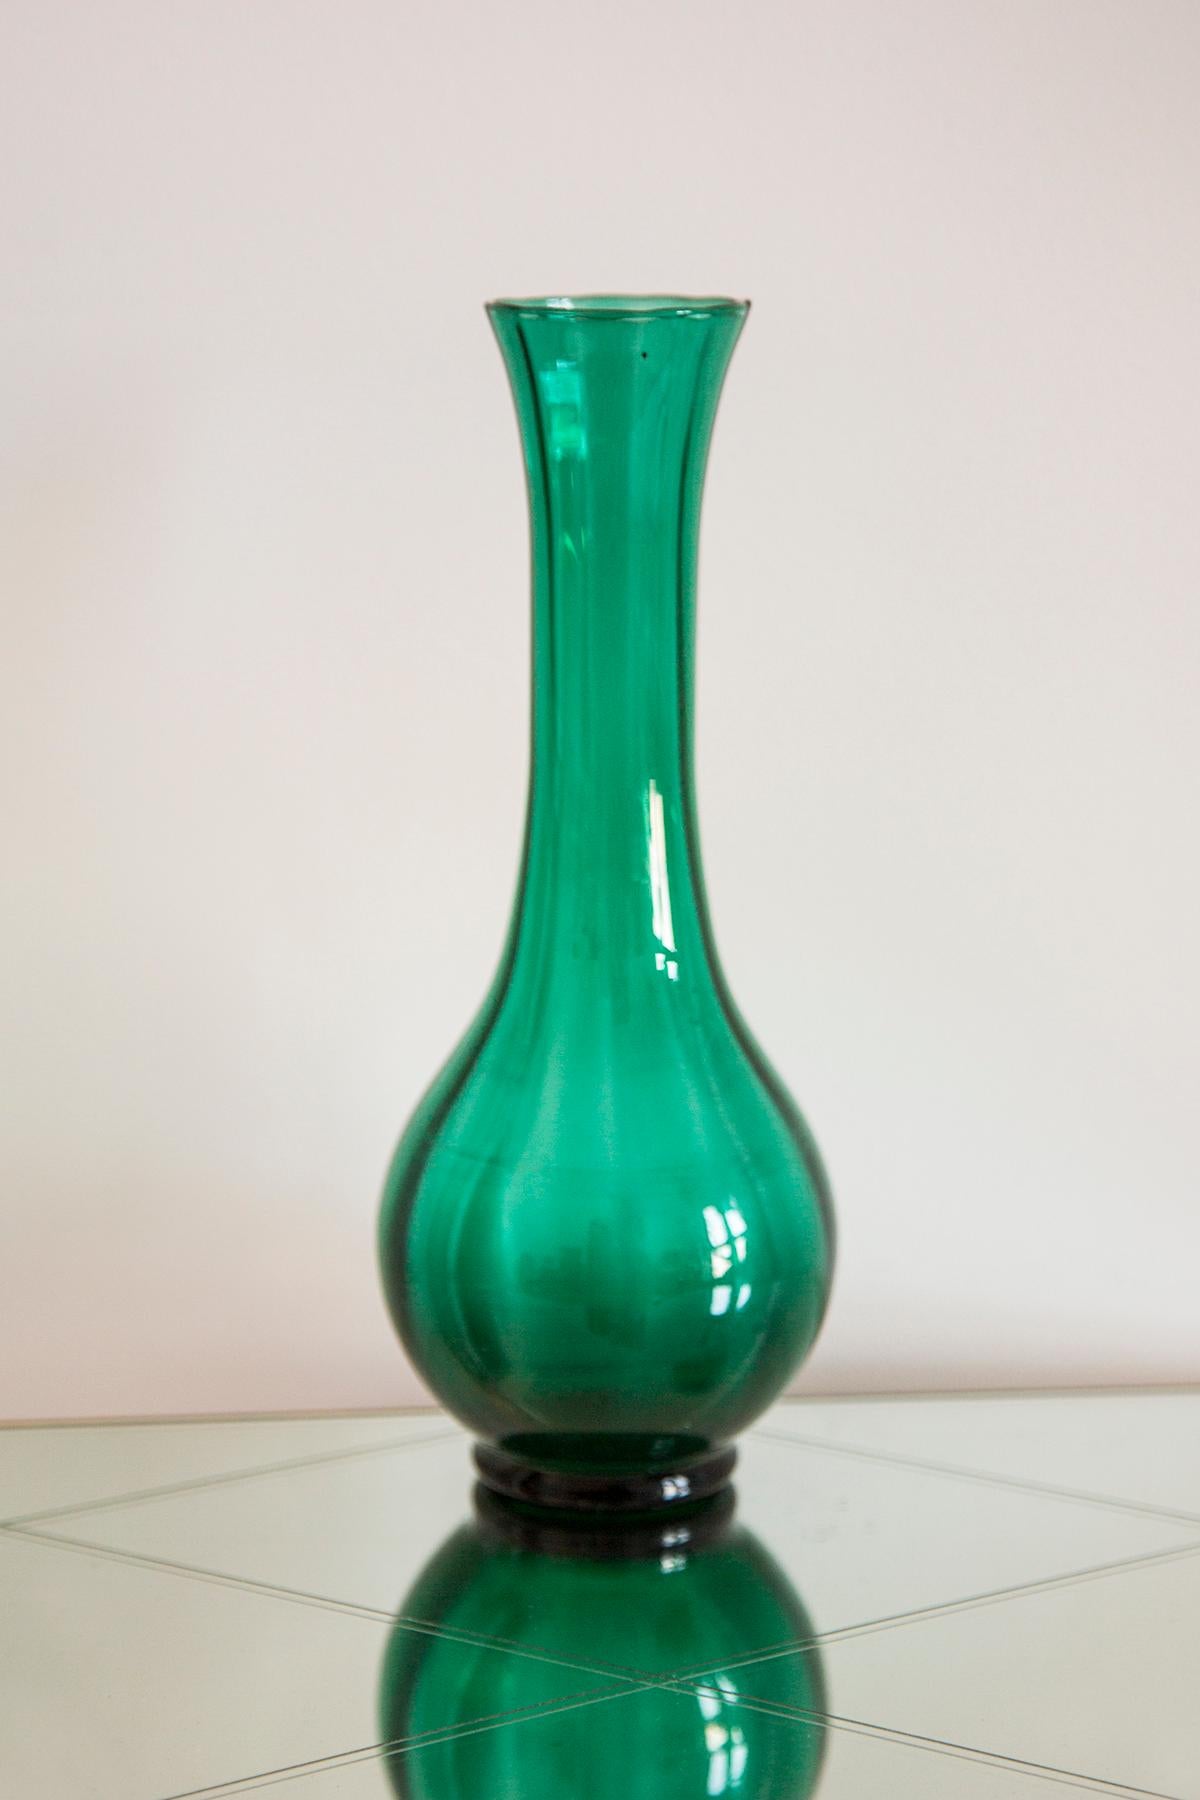 Light Vase 
Author: Decorative Glassworks 